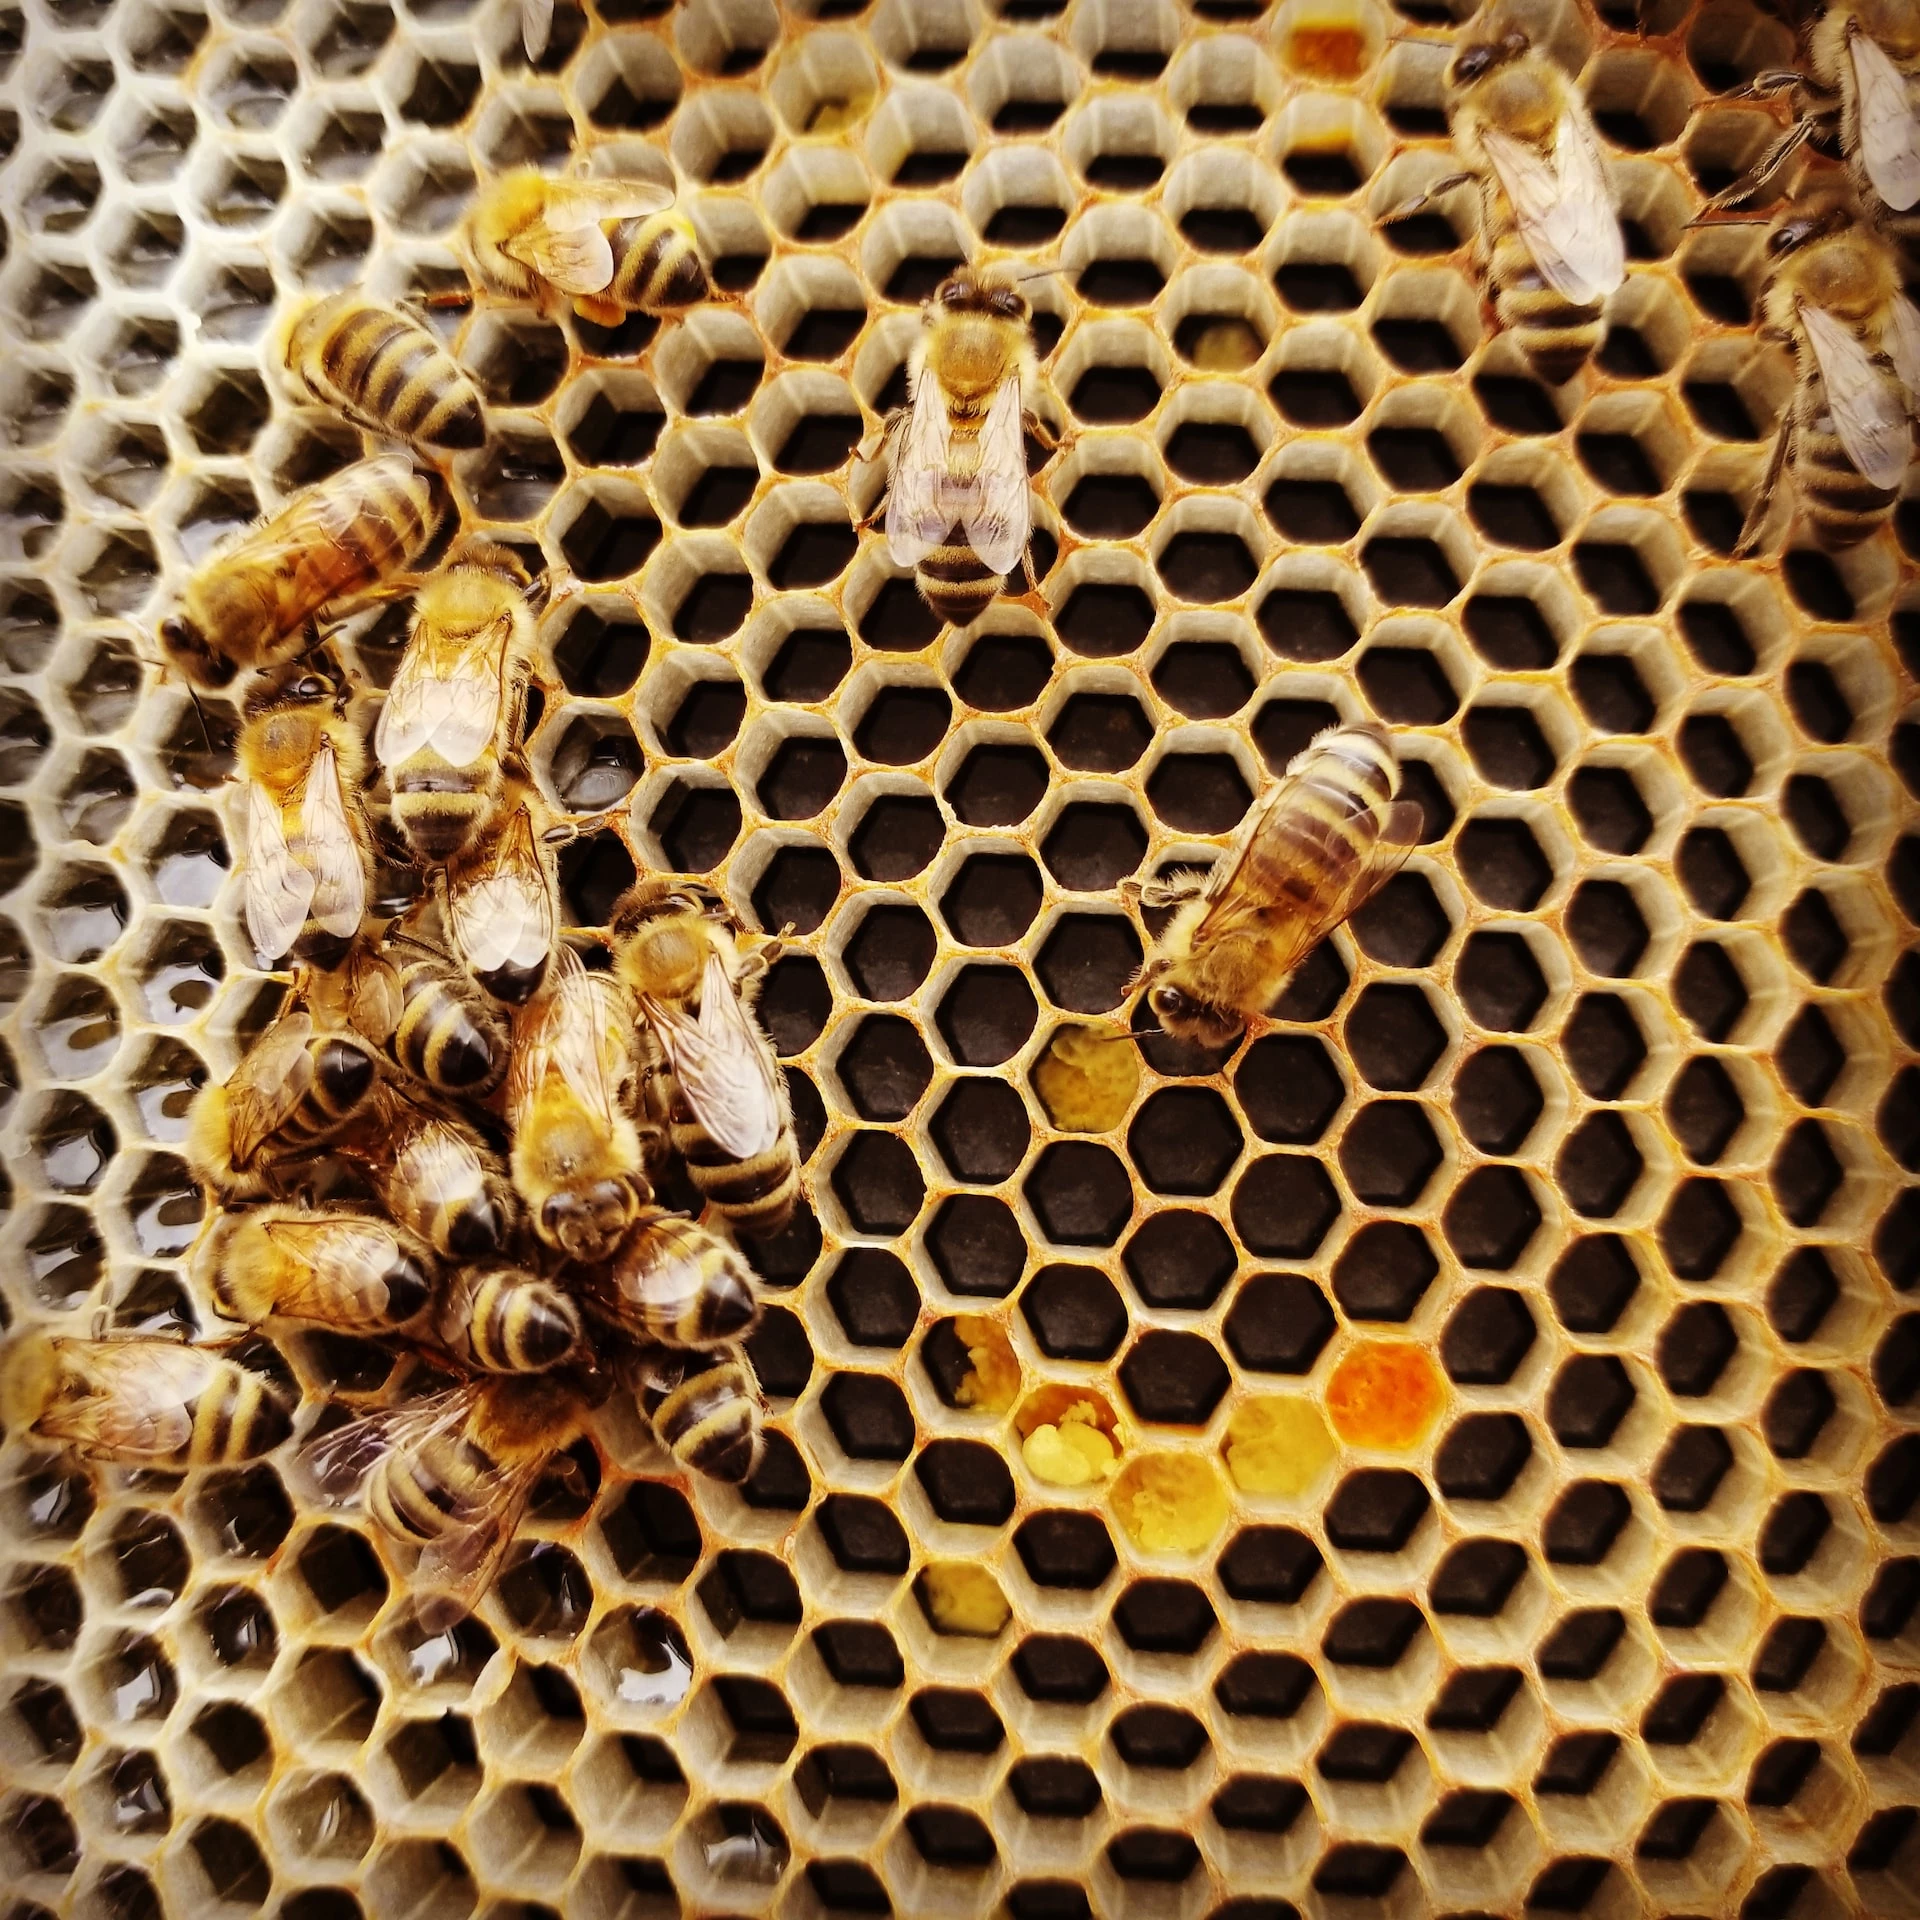 Why do bees make honey?